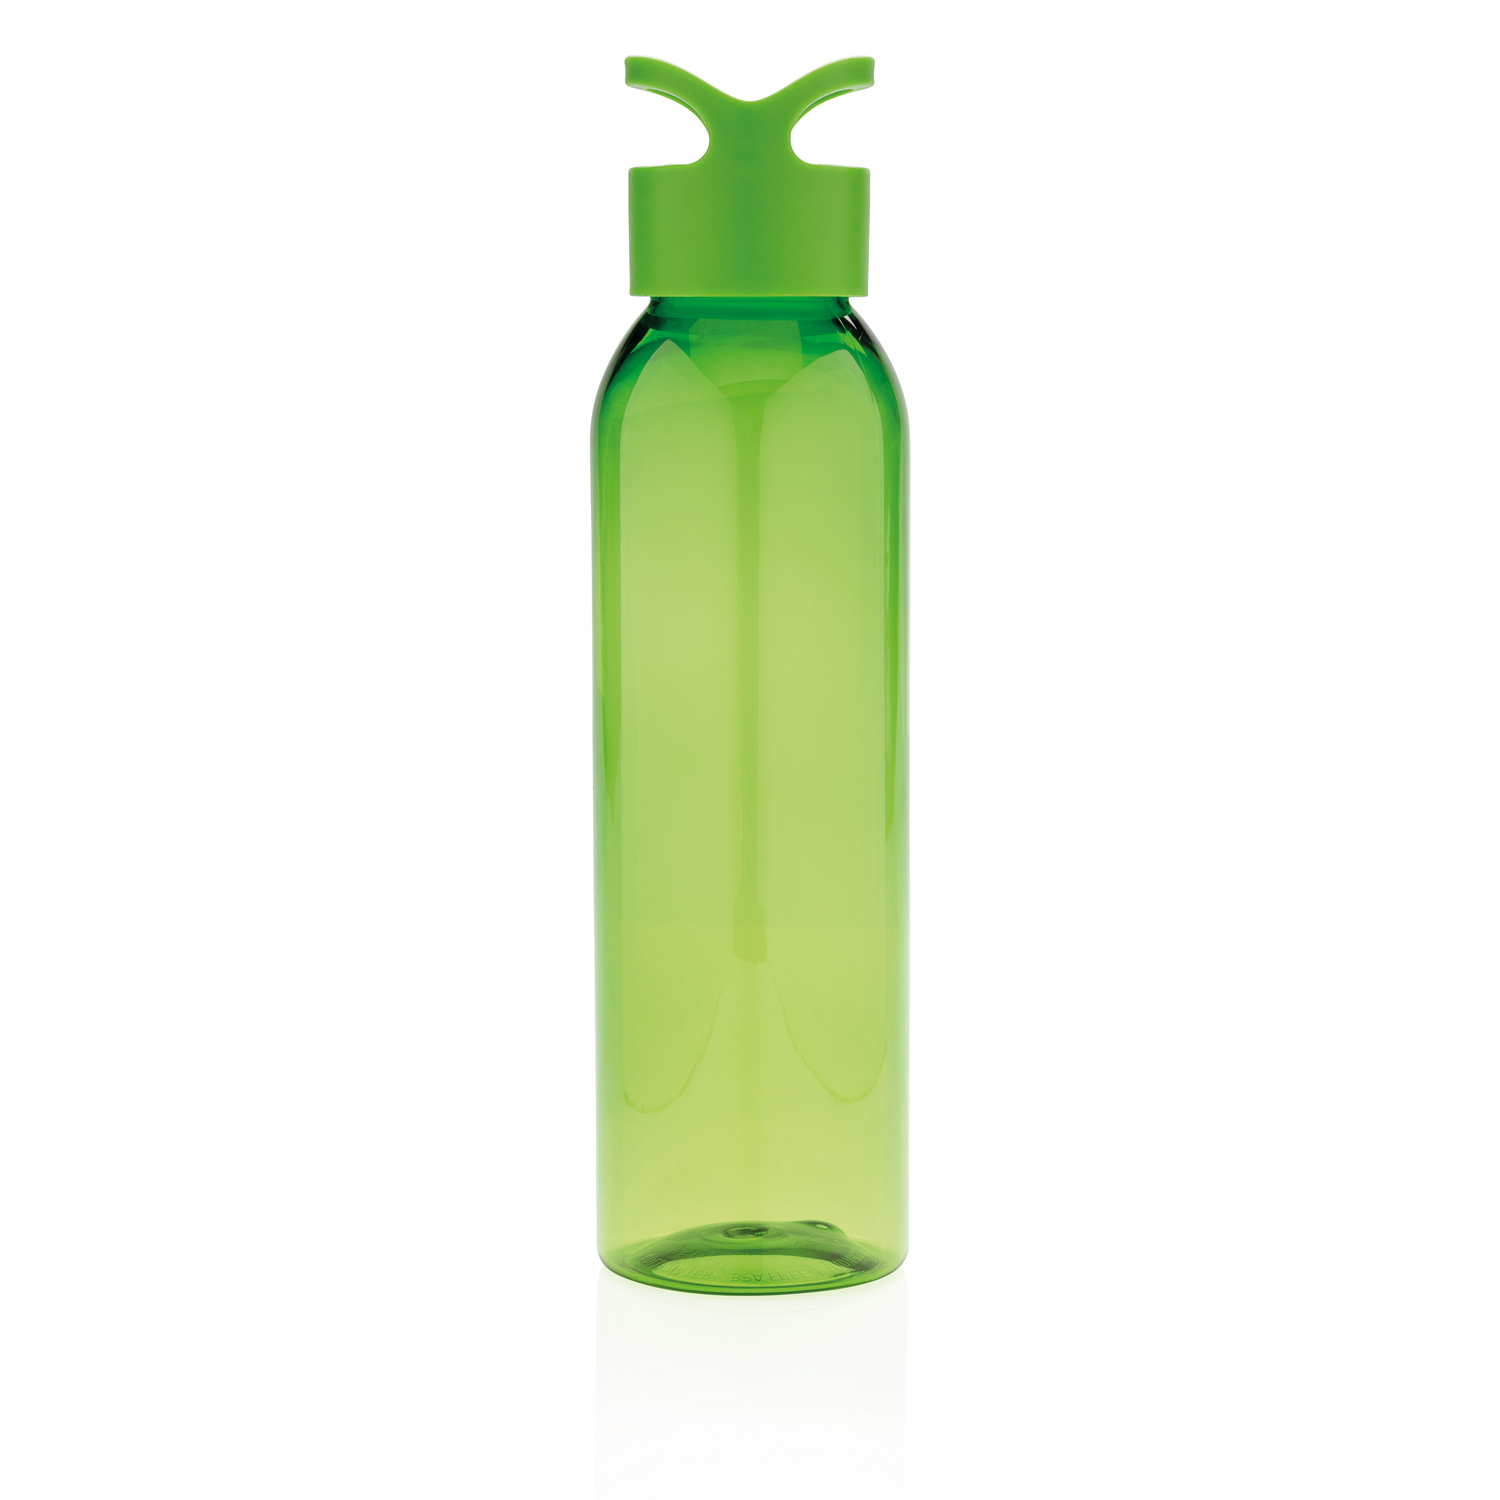 Бутылка для воды сталь. Бутылка для воды. Пластиковая бутылка для воды. Вода в зеленой бутылке. Герметичная бутылка.